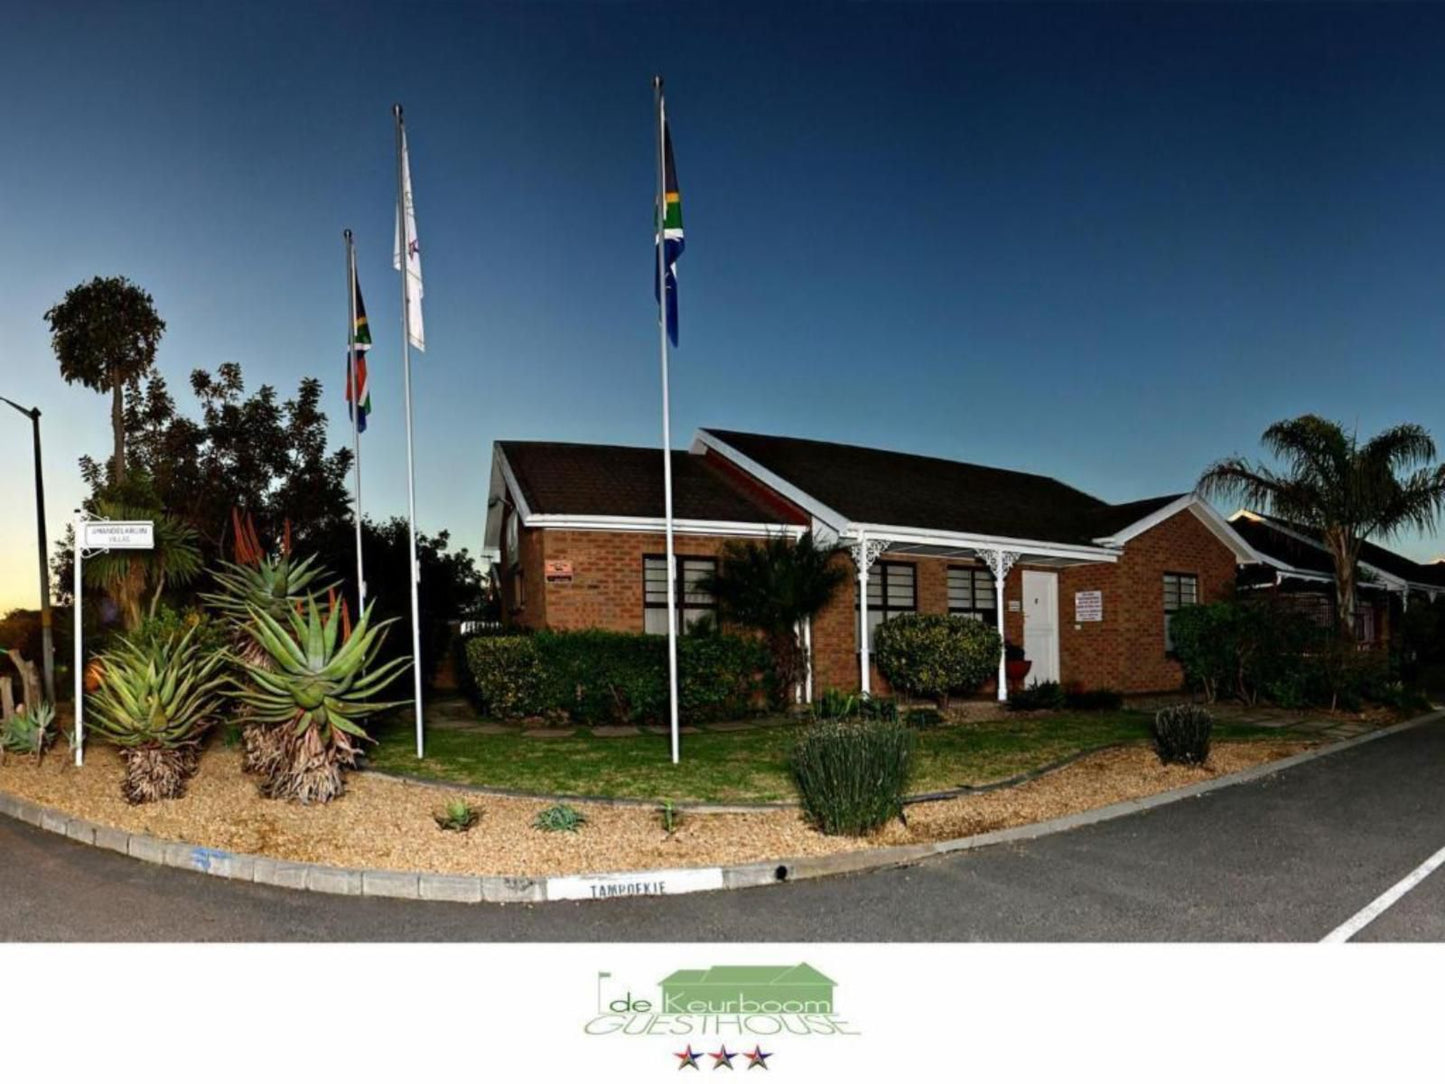 De Keurboom Guest House Kuils River Cape Town Western Cape South Africa Flag, House, Building, Architecture